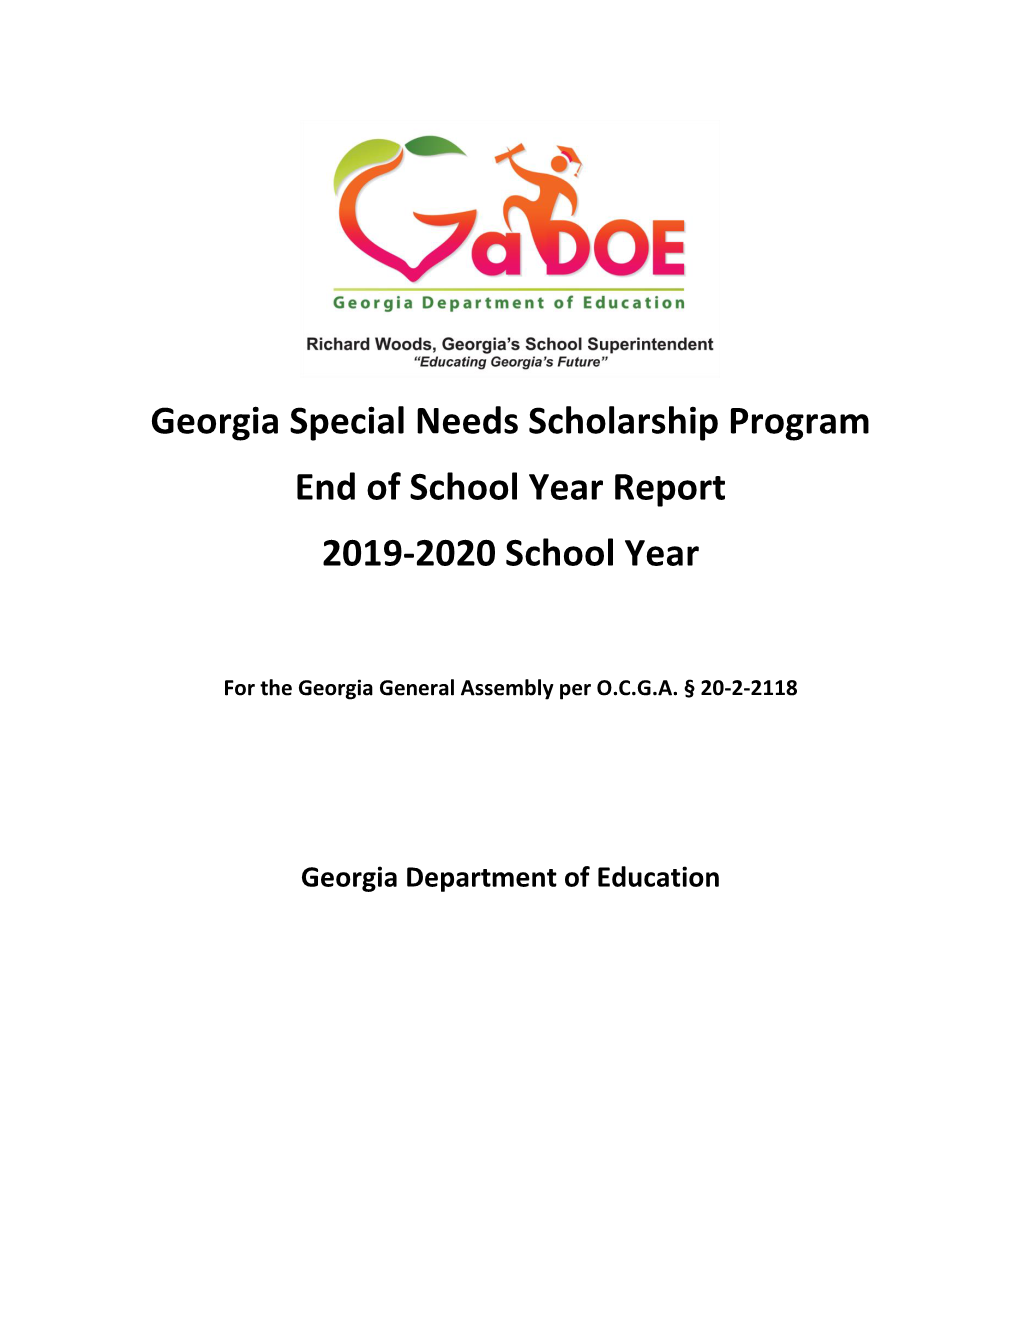 Georgia Special Needs Scholarship Program End of School Year Report 2019-2020 School Year